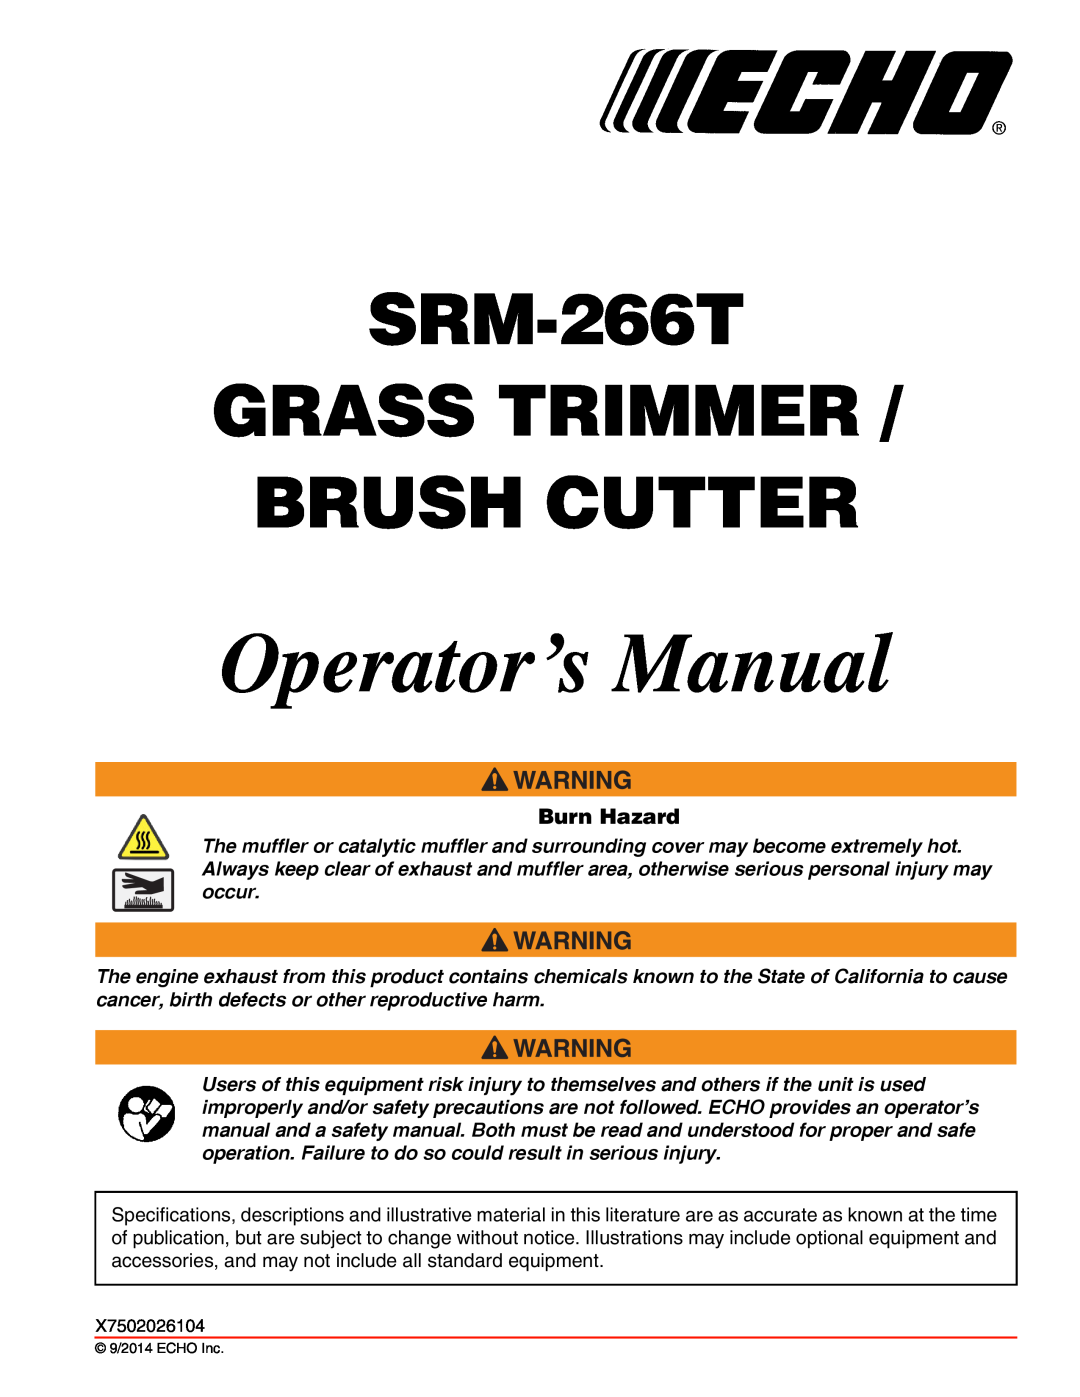 Echo specifications Burn Hazard, Operator’s Manual, SRM-266T GRASS TRIMMER BRUSH CUTTER 